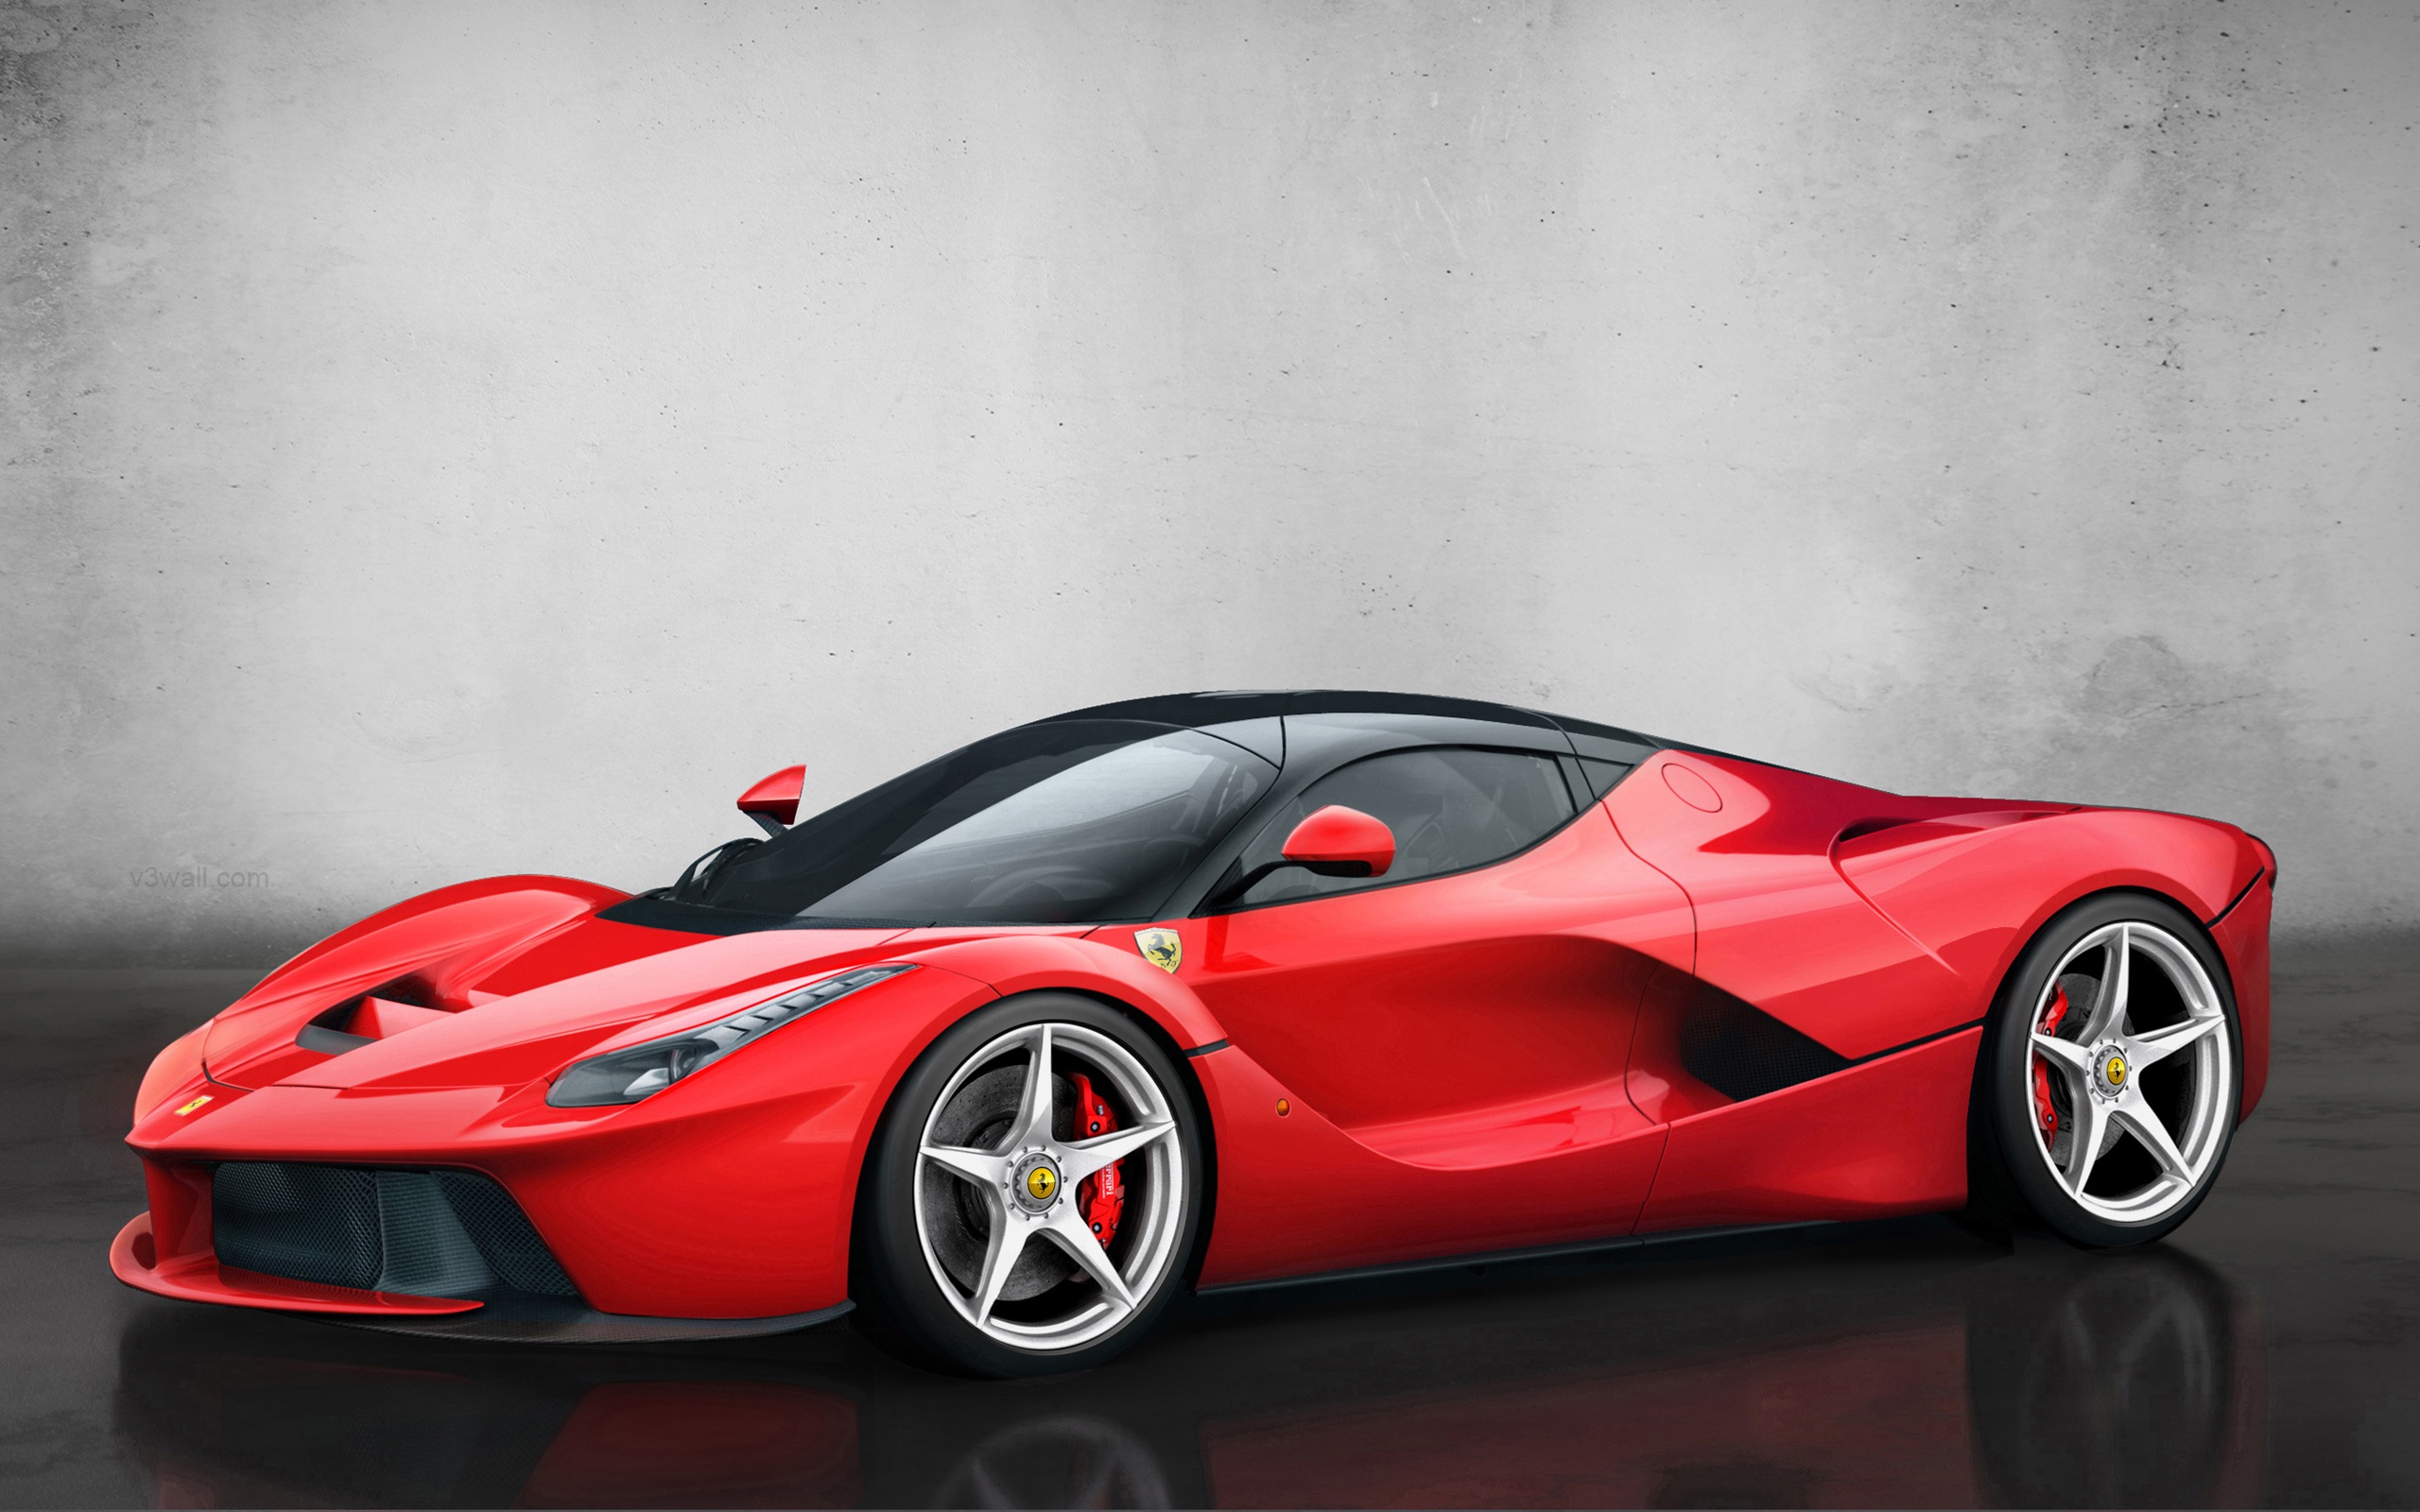 2013 Ferrari LaFerrari red supercar HD Wallpaper #7 - 2560x1600